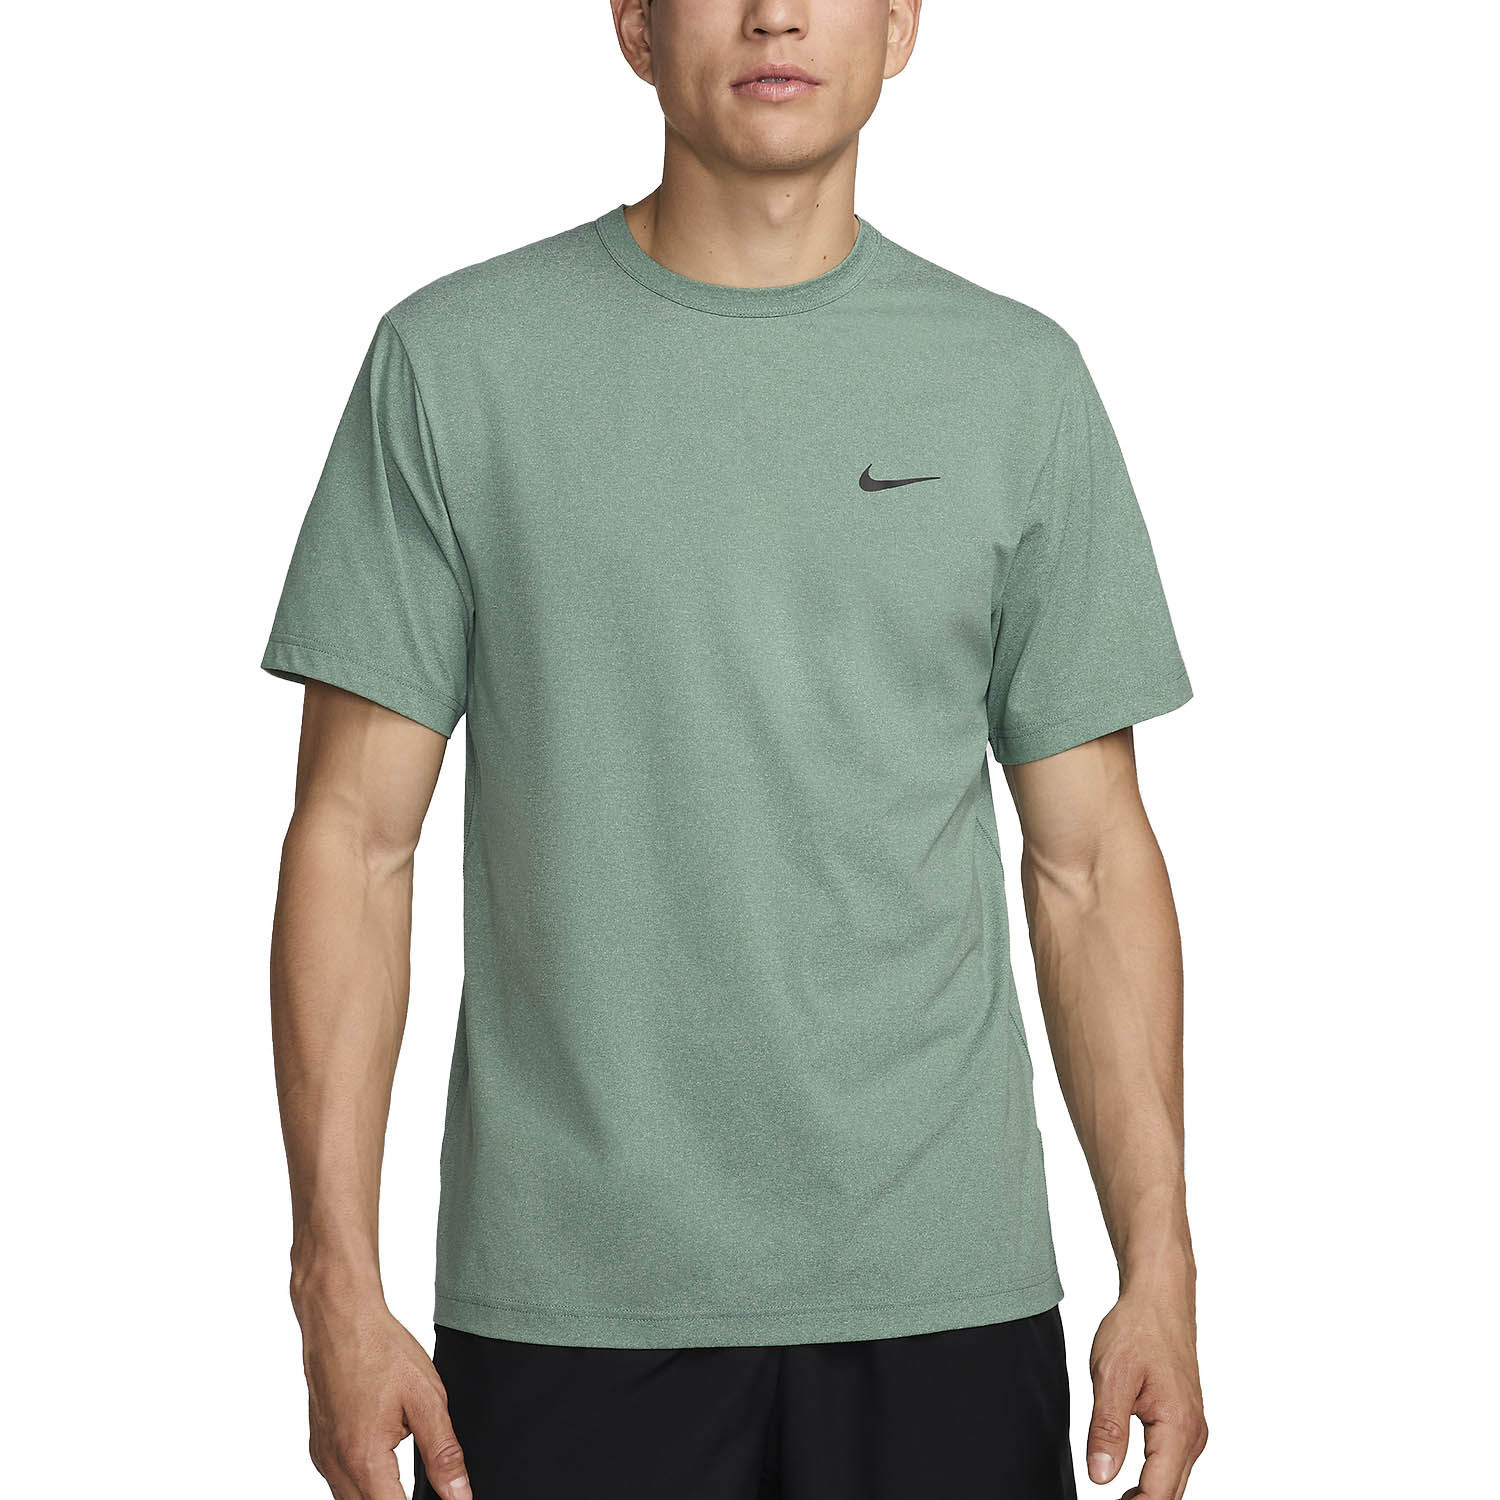 Nike Dri-FIT Hyverse T-Shirt - Bicoastal/Heather/Black